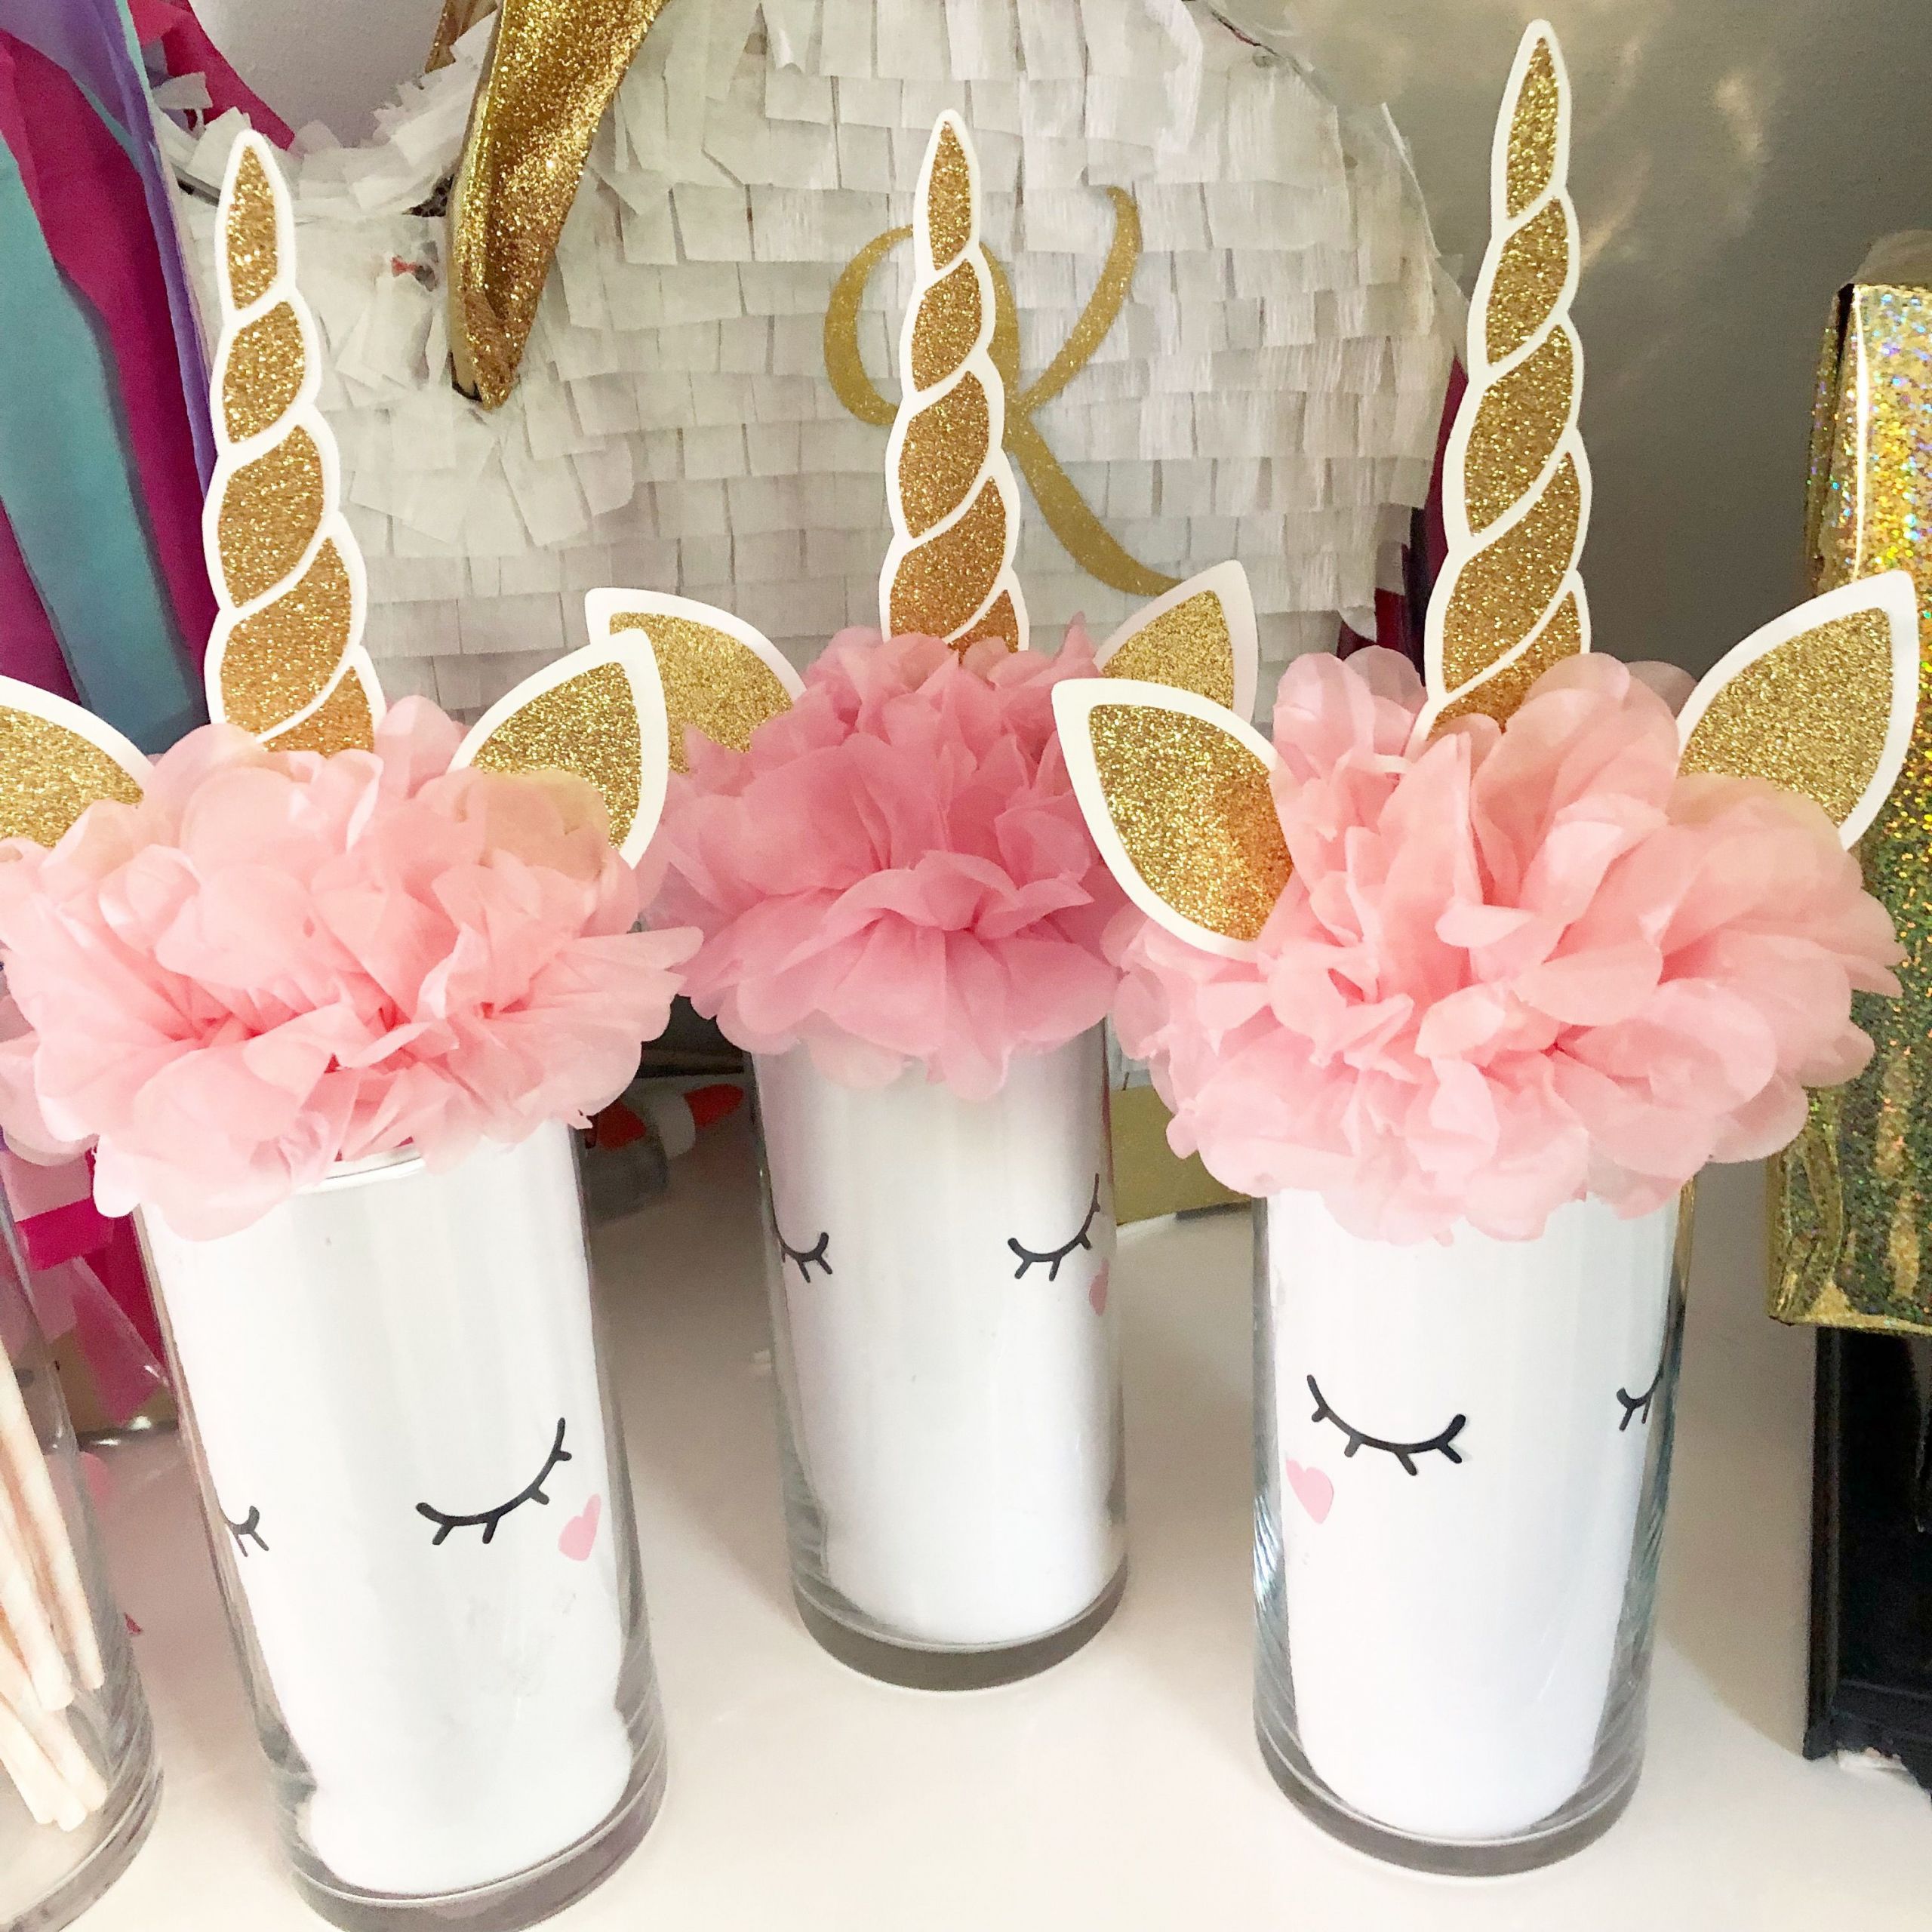 Unicorn Party Centerpiece Ideas
 Unicorn centerpiece made from dollar tree vase in 2019